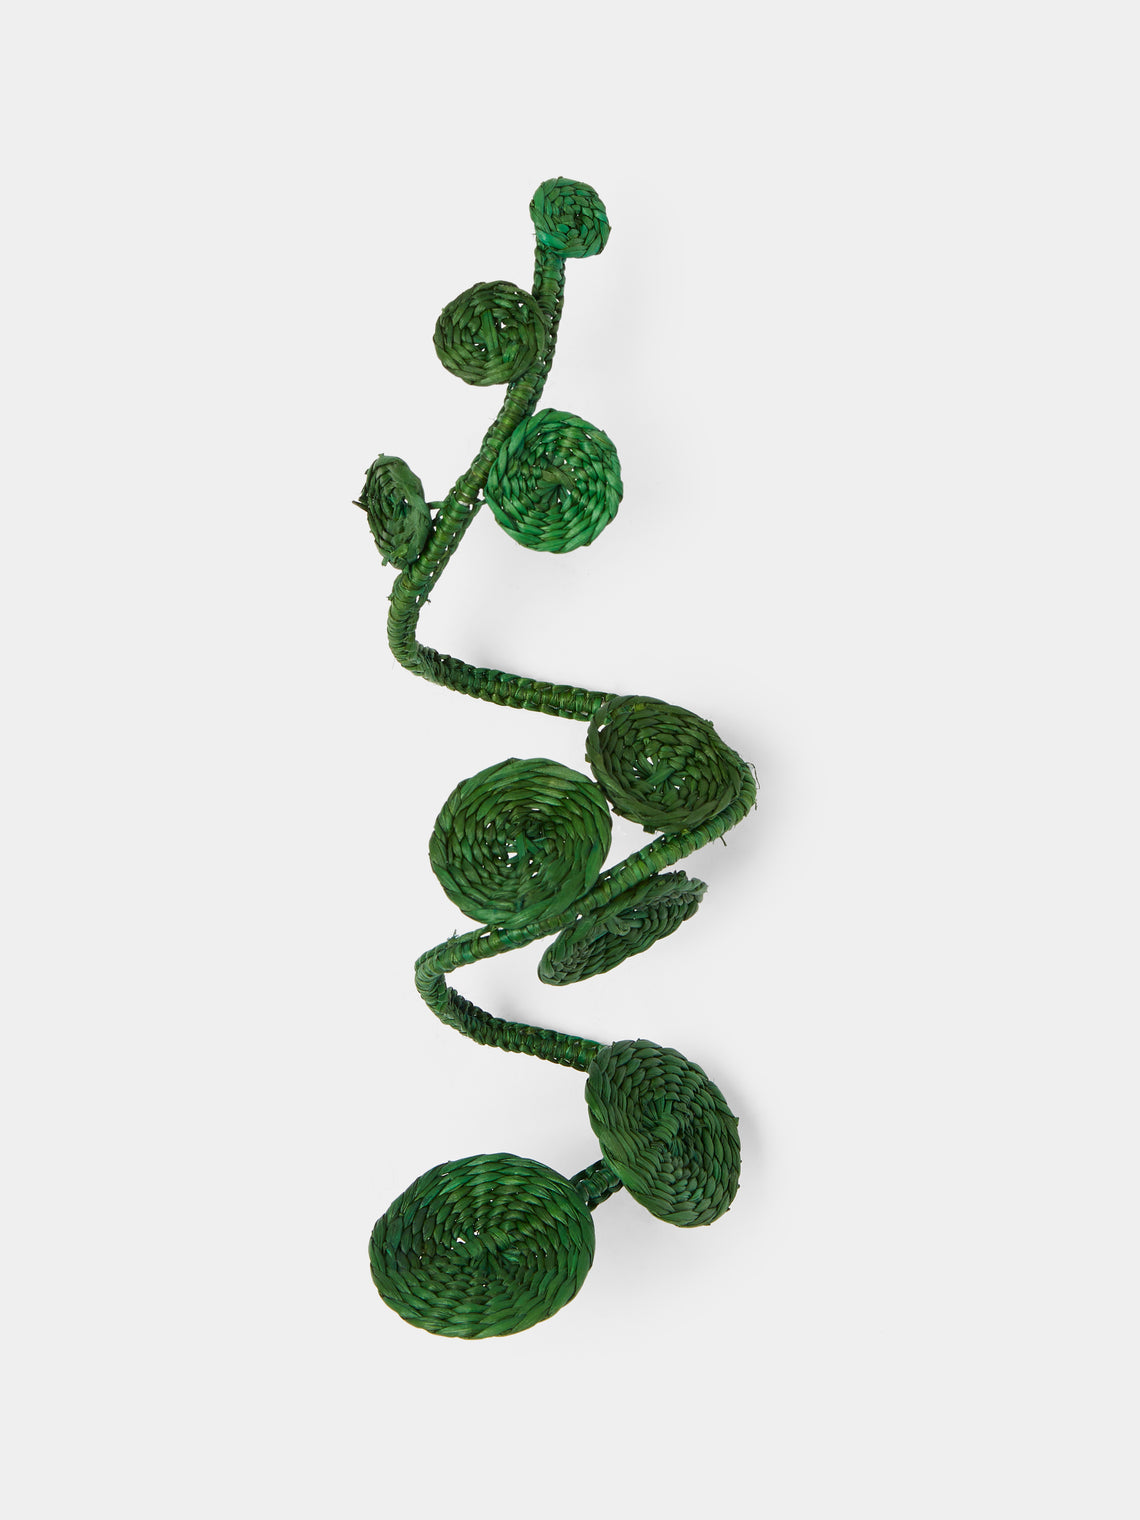 Artesanías del Atlántico - Ginger Handwoven Palm Napkin Rings (Set of 4) - Green - ABASK - 